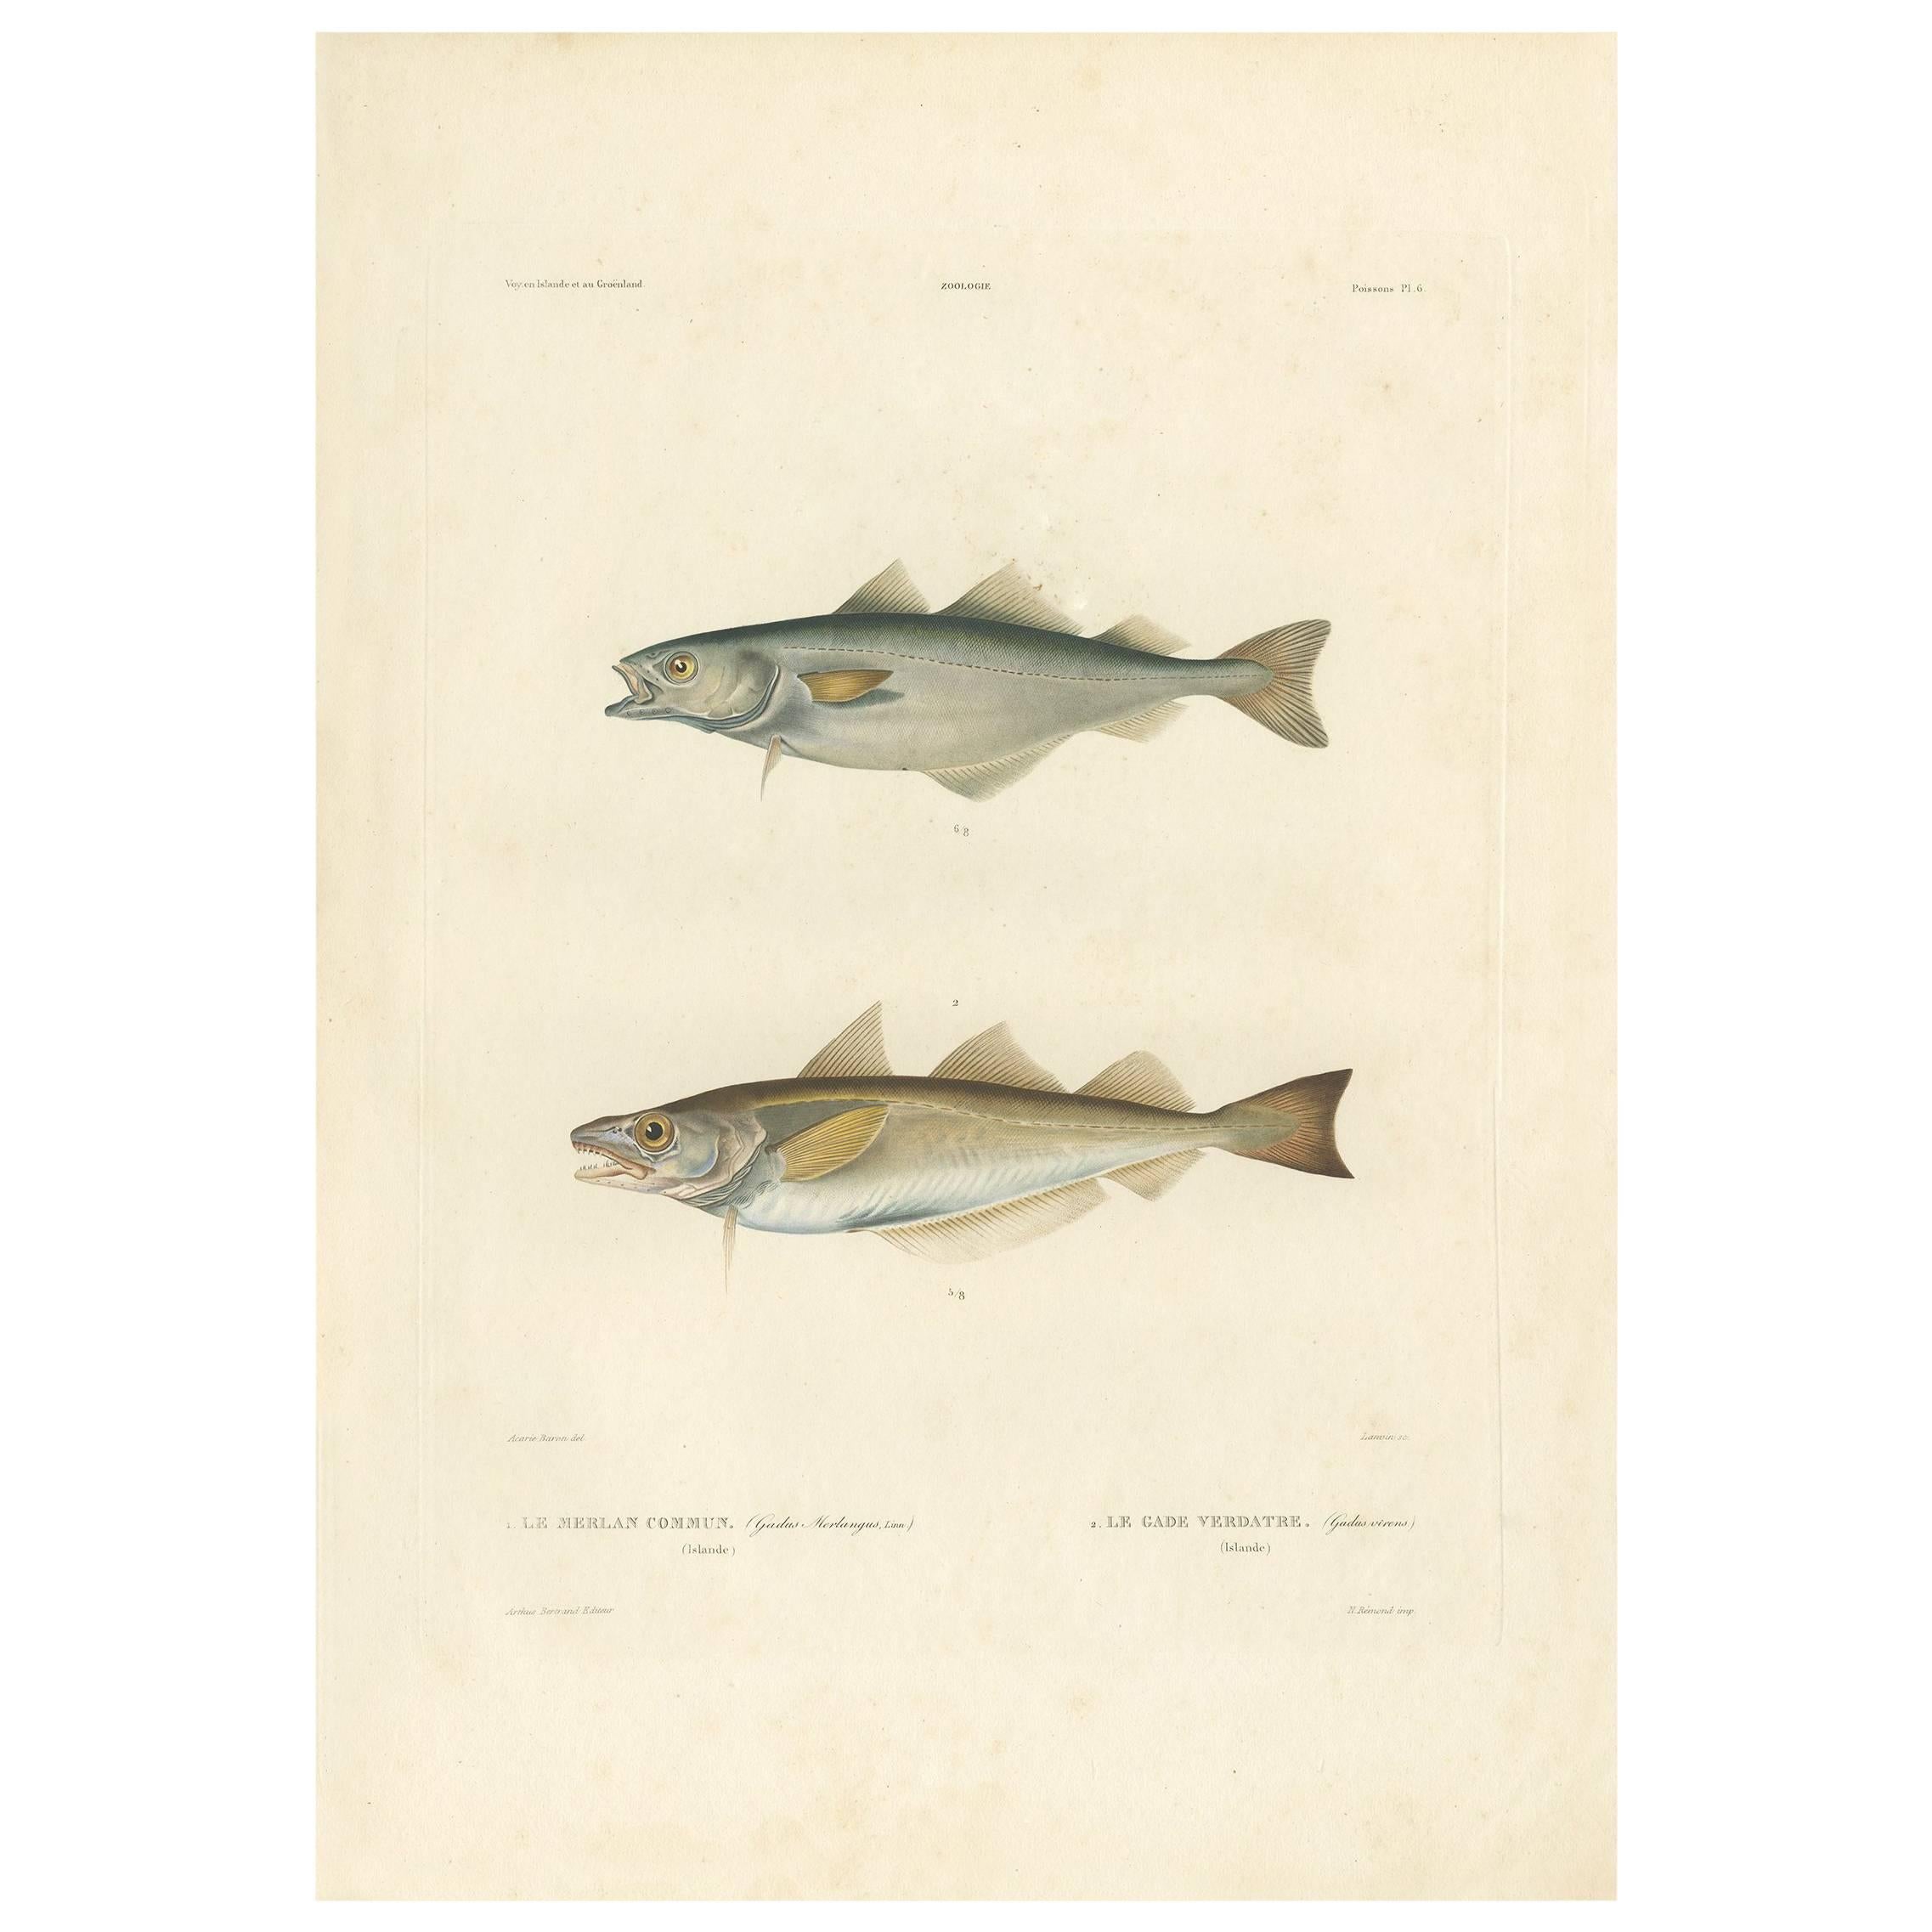 Antique Fish Print of the Merangius Merlangus 'Merling' and the Saithe, 1842